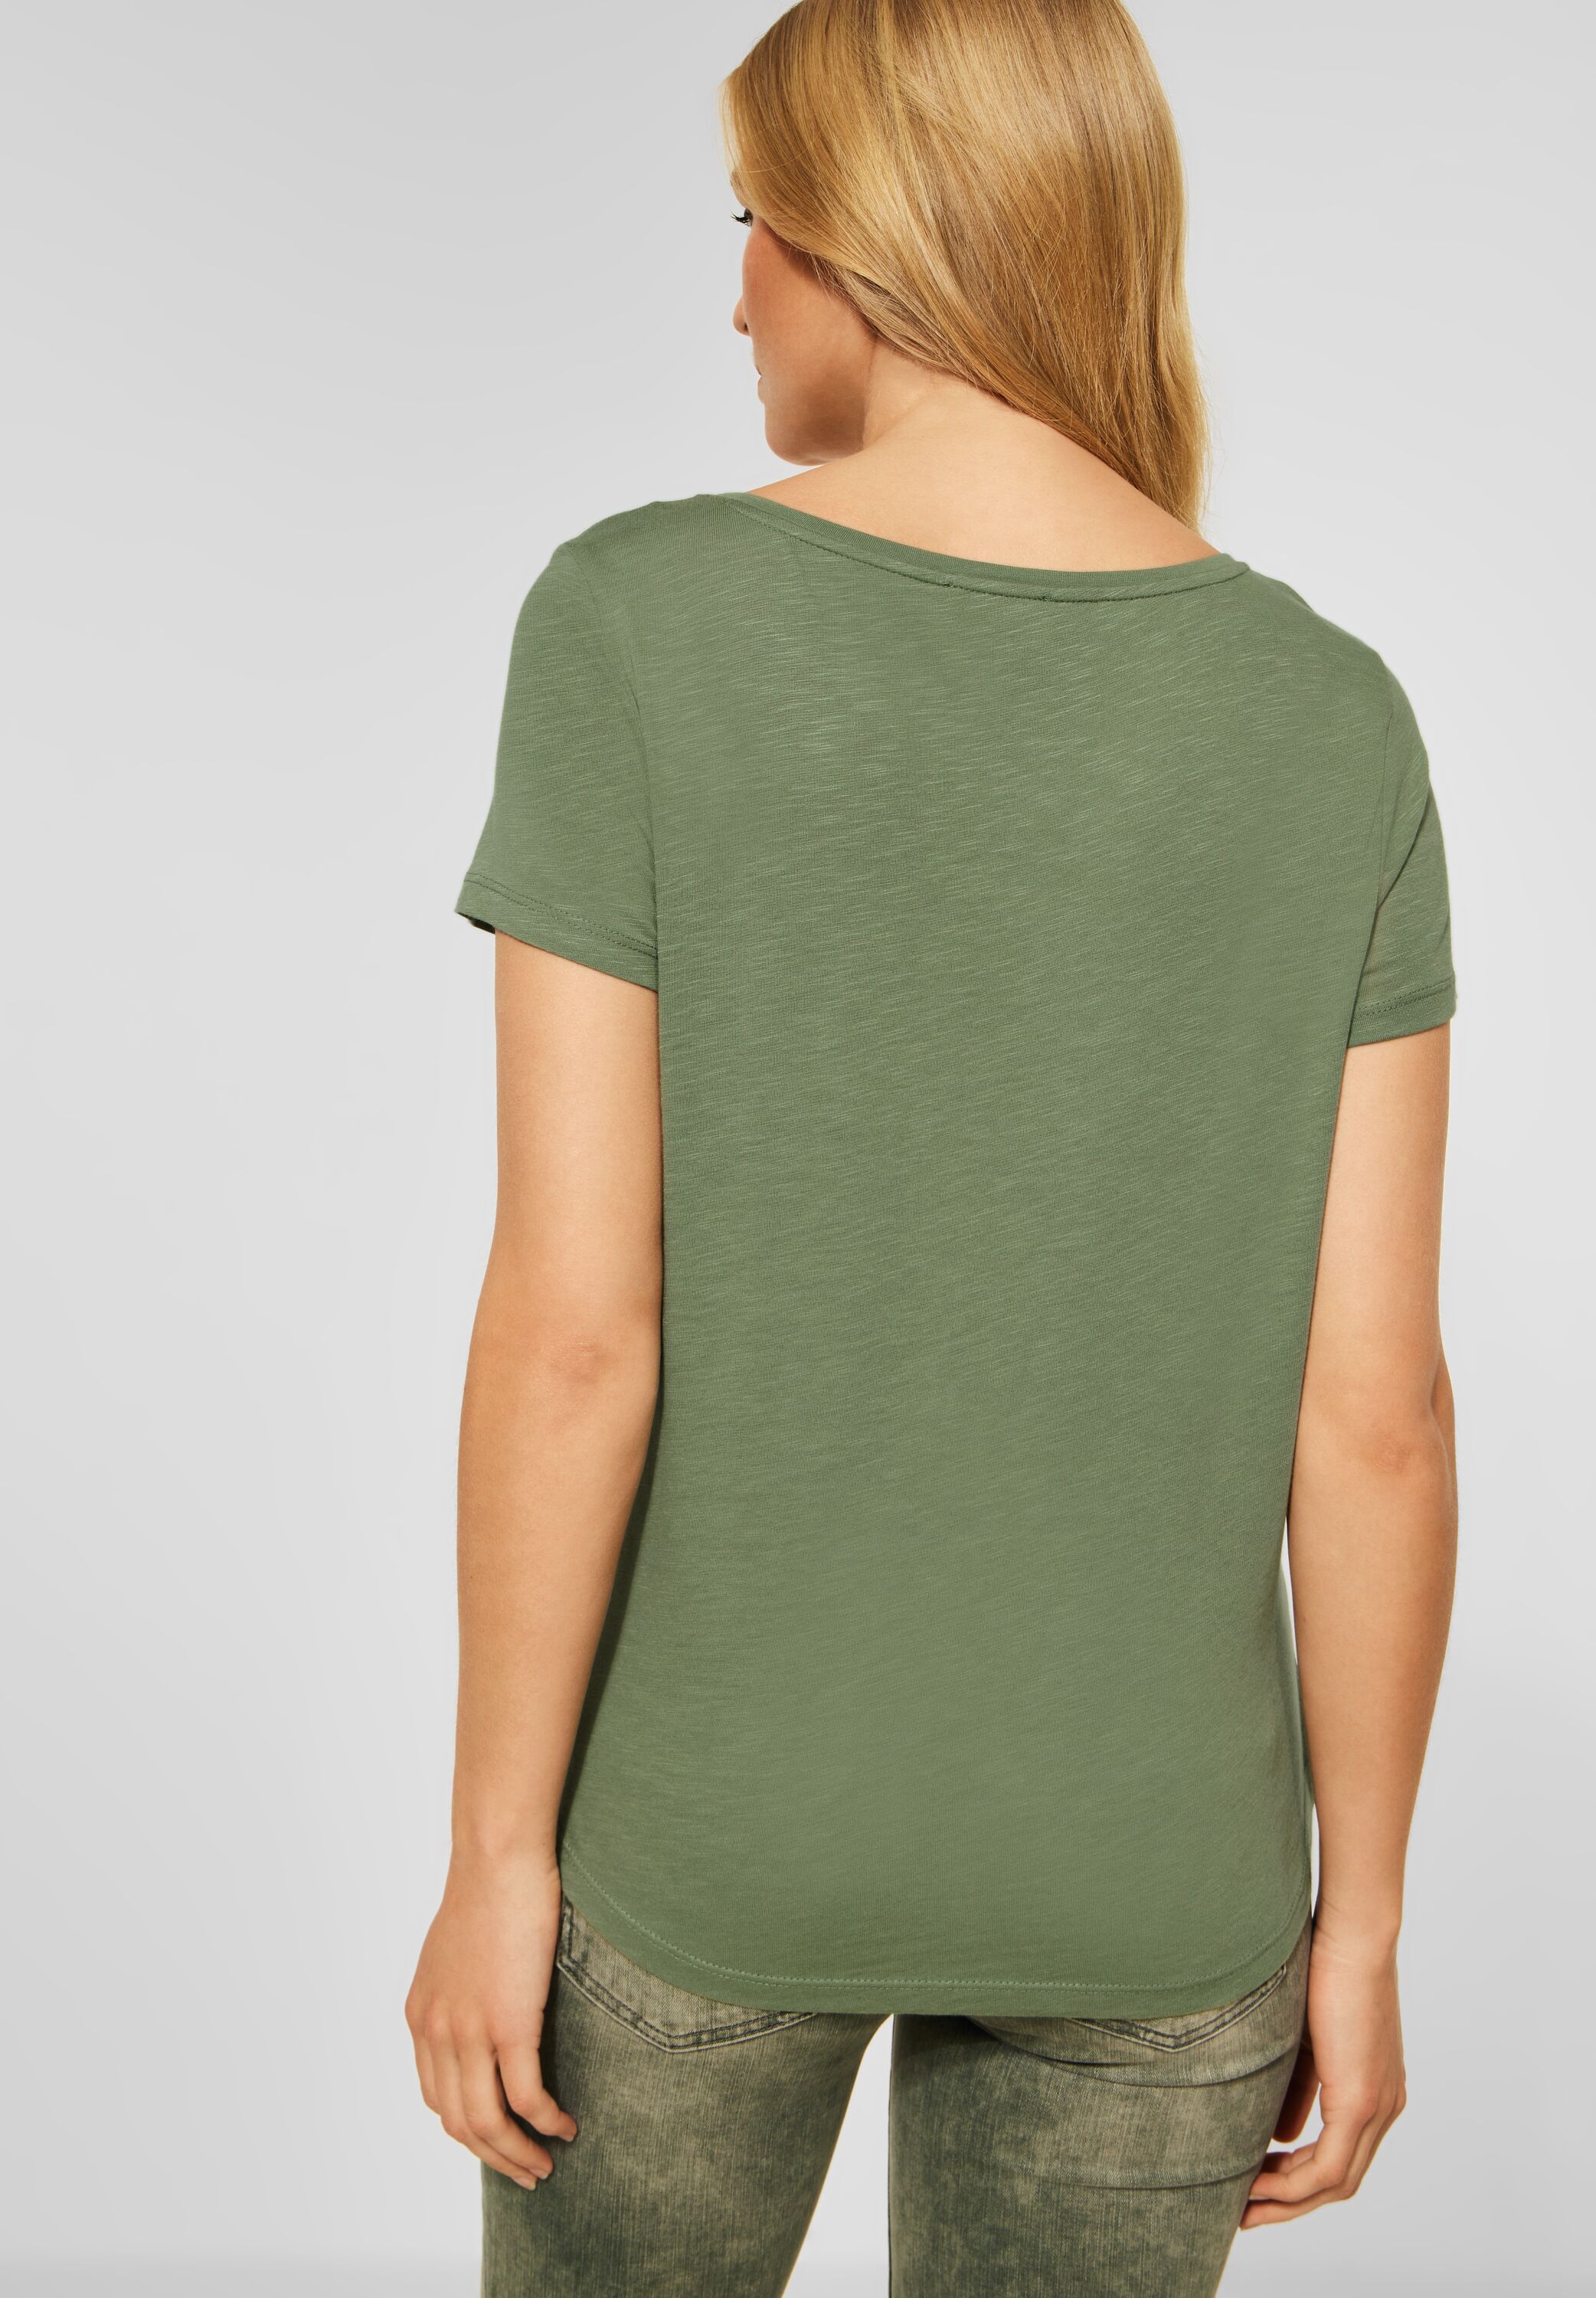 New T-Shirt in Gerda CONCEPT im reduziert Mode SALE Street - One Fern Green A317569-13348